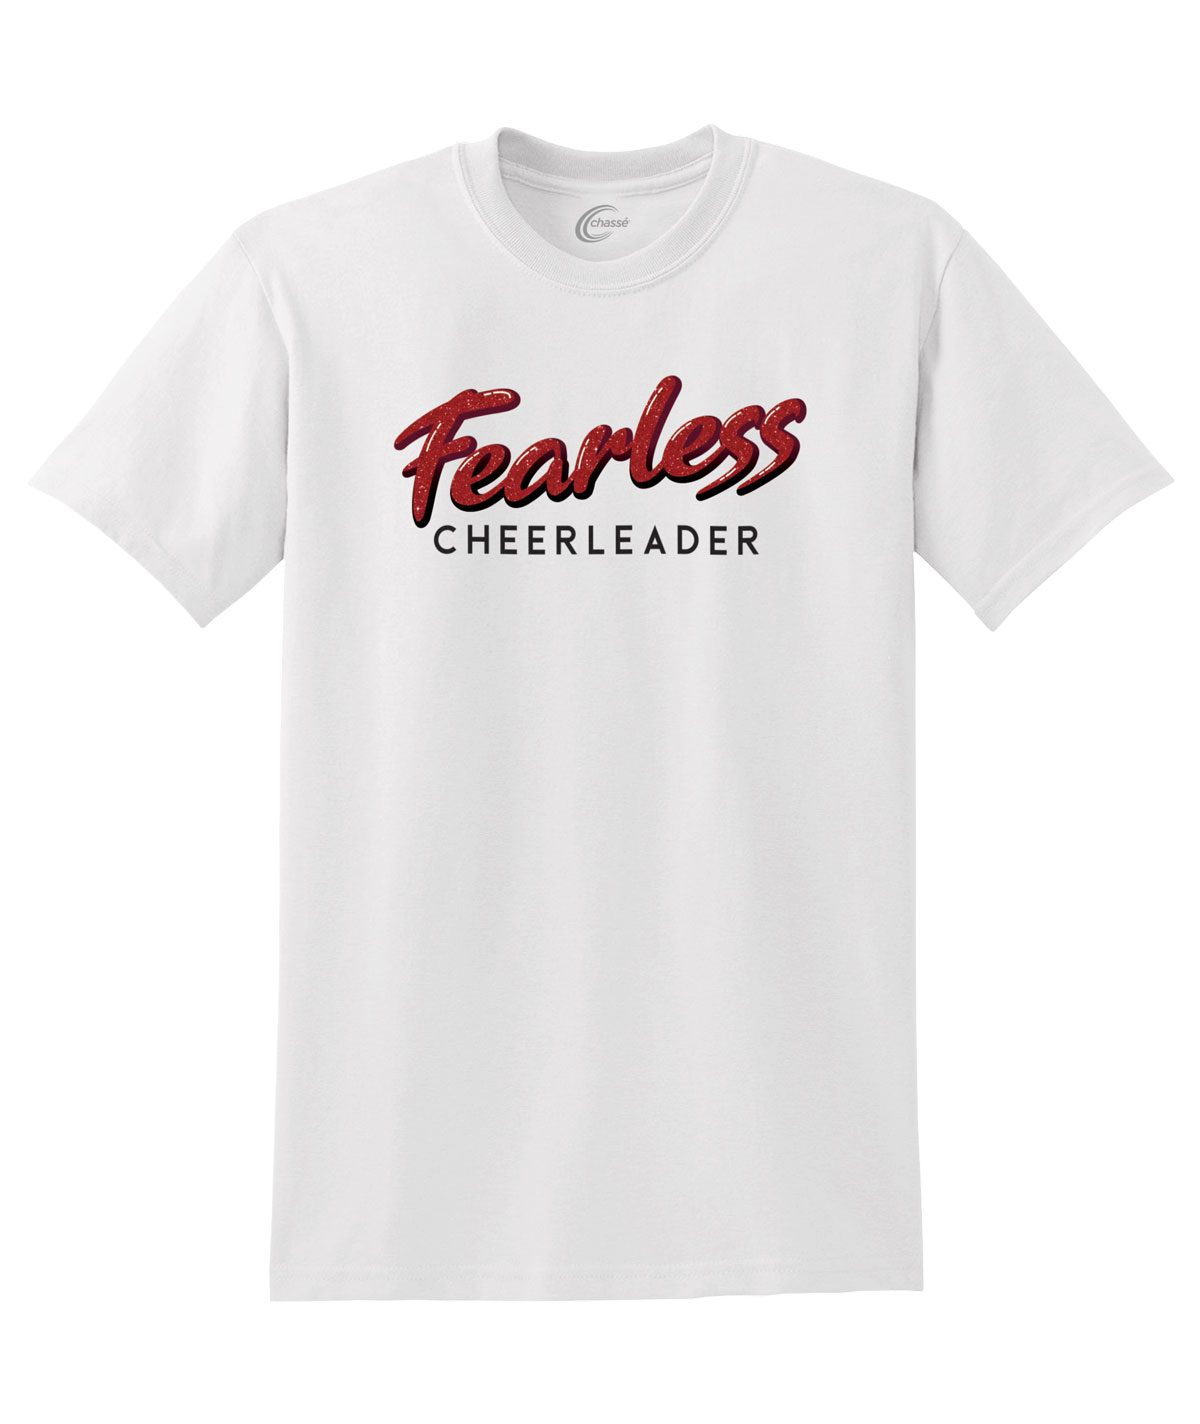 Chasse Fearless Cheerleader Tee